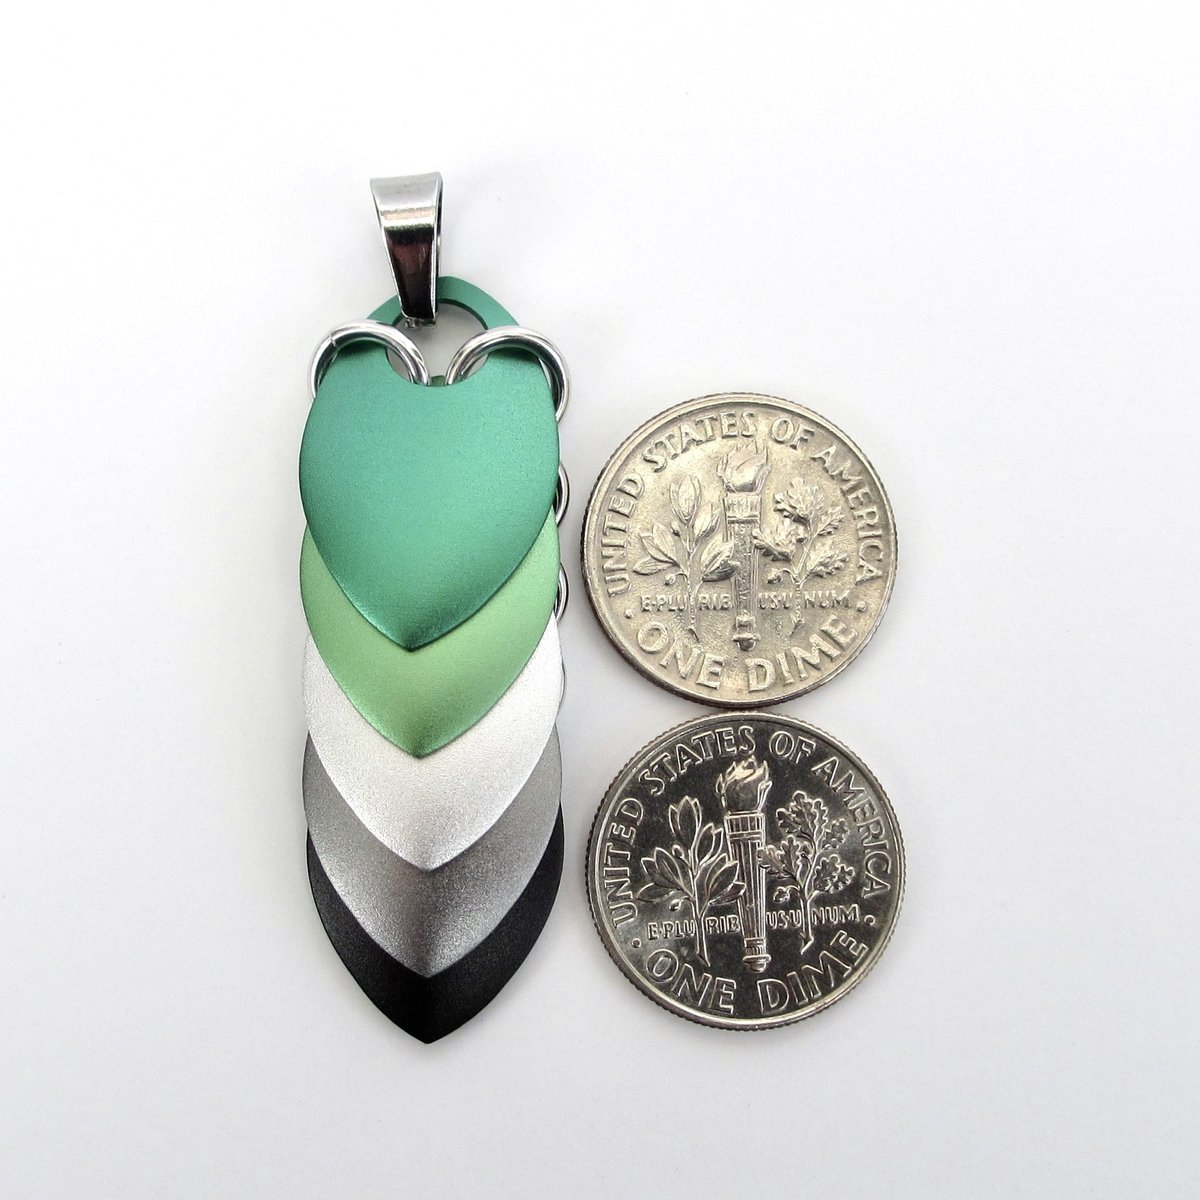 Aromantic pride pendant necklace, chainmail scale pendant, aro pride jewelry, green white gray black